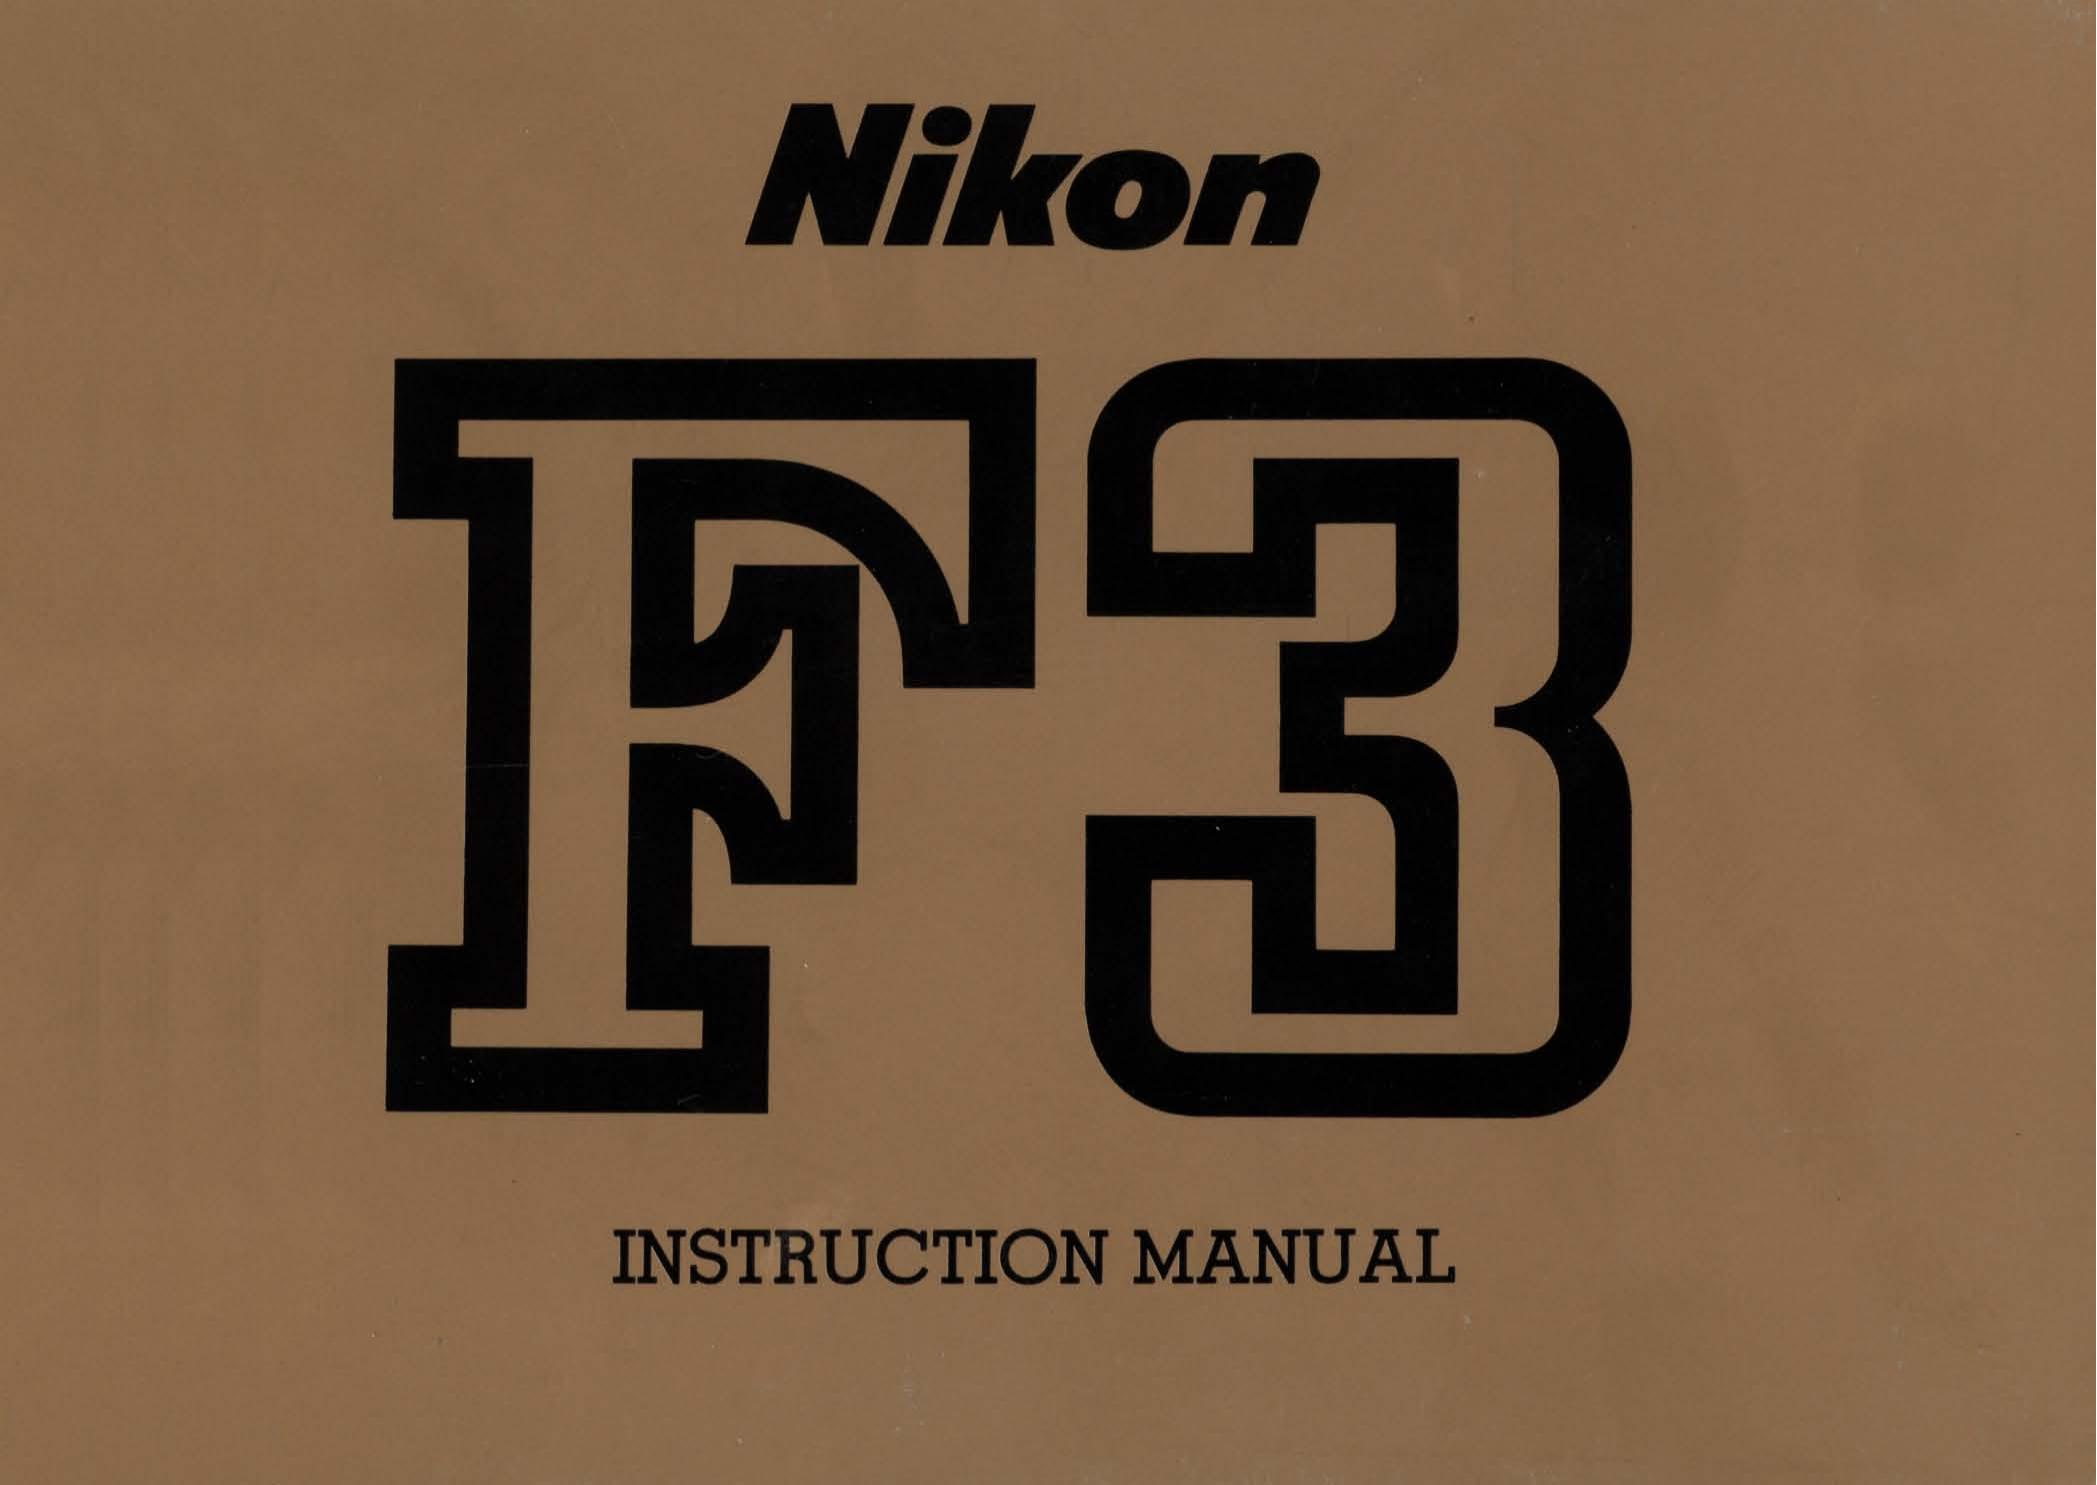 Nikon F3HP Film Camera User Manual